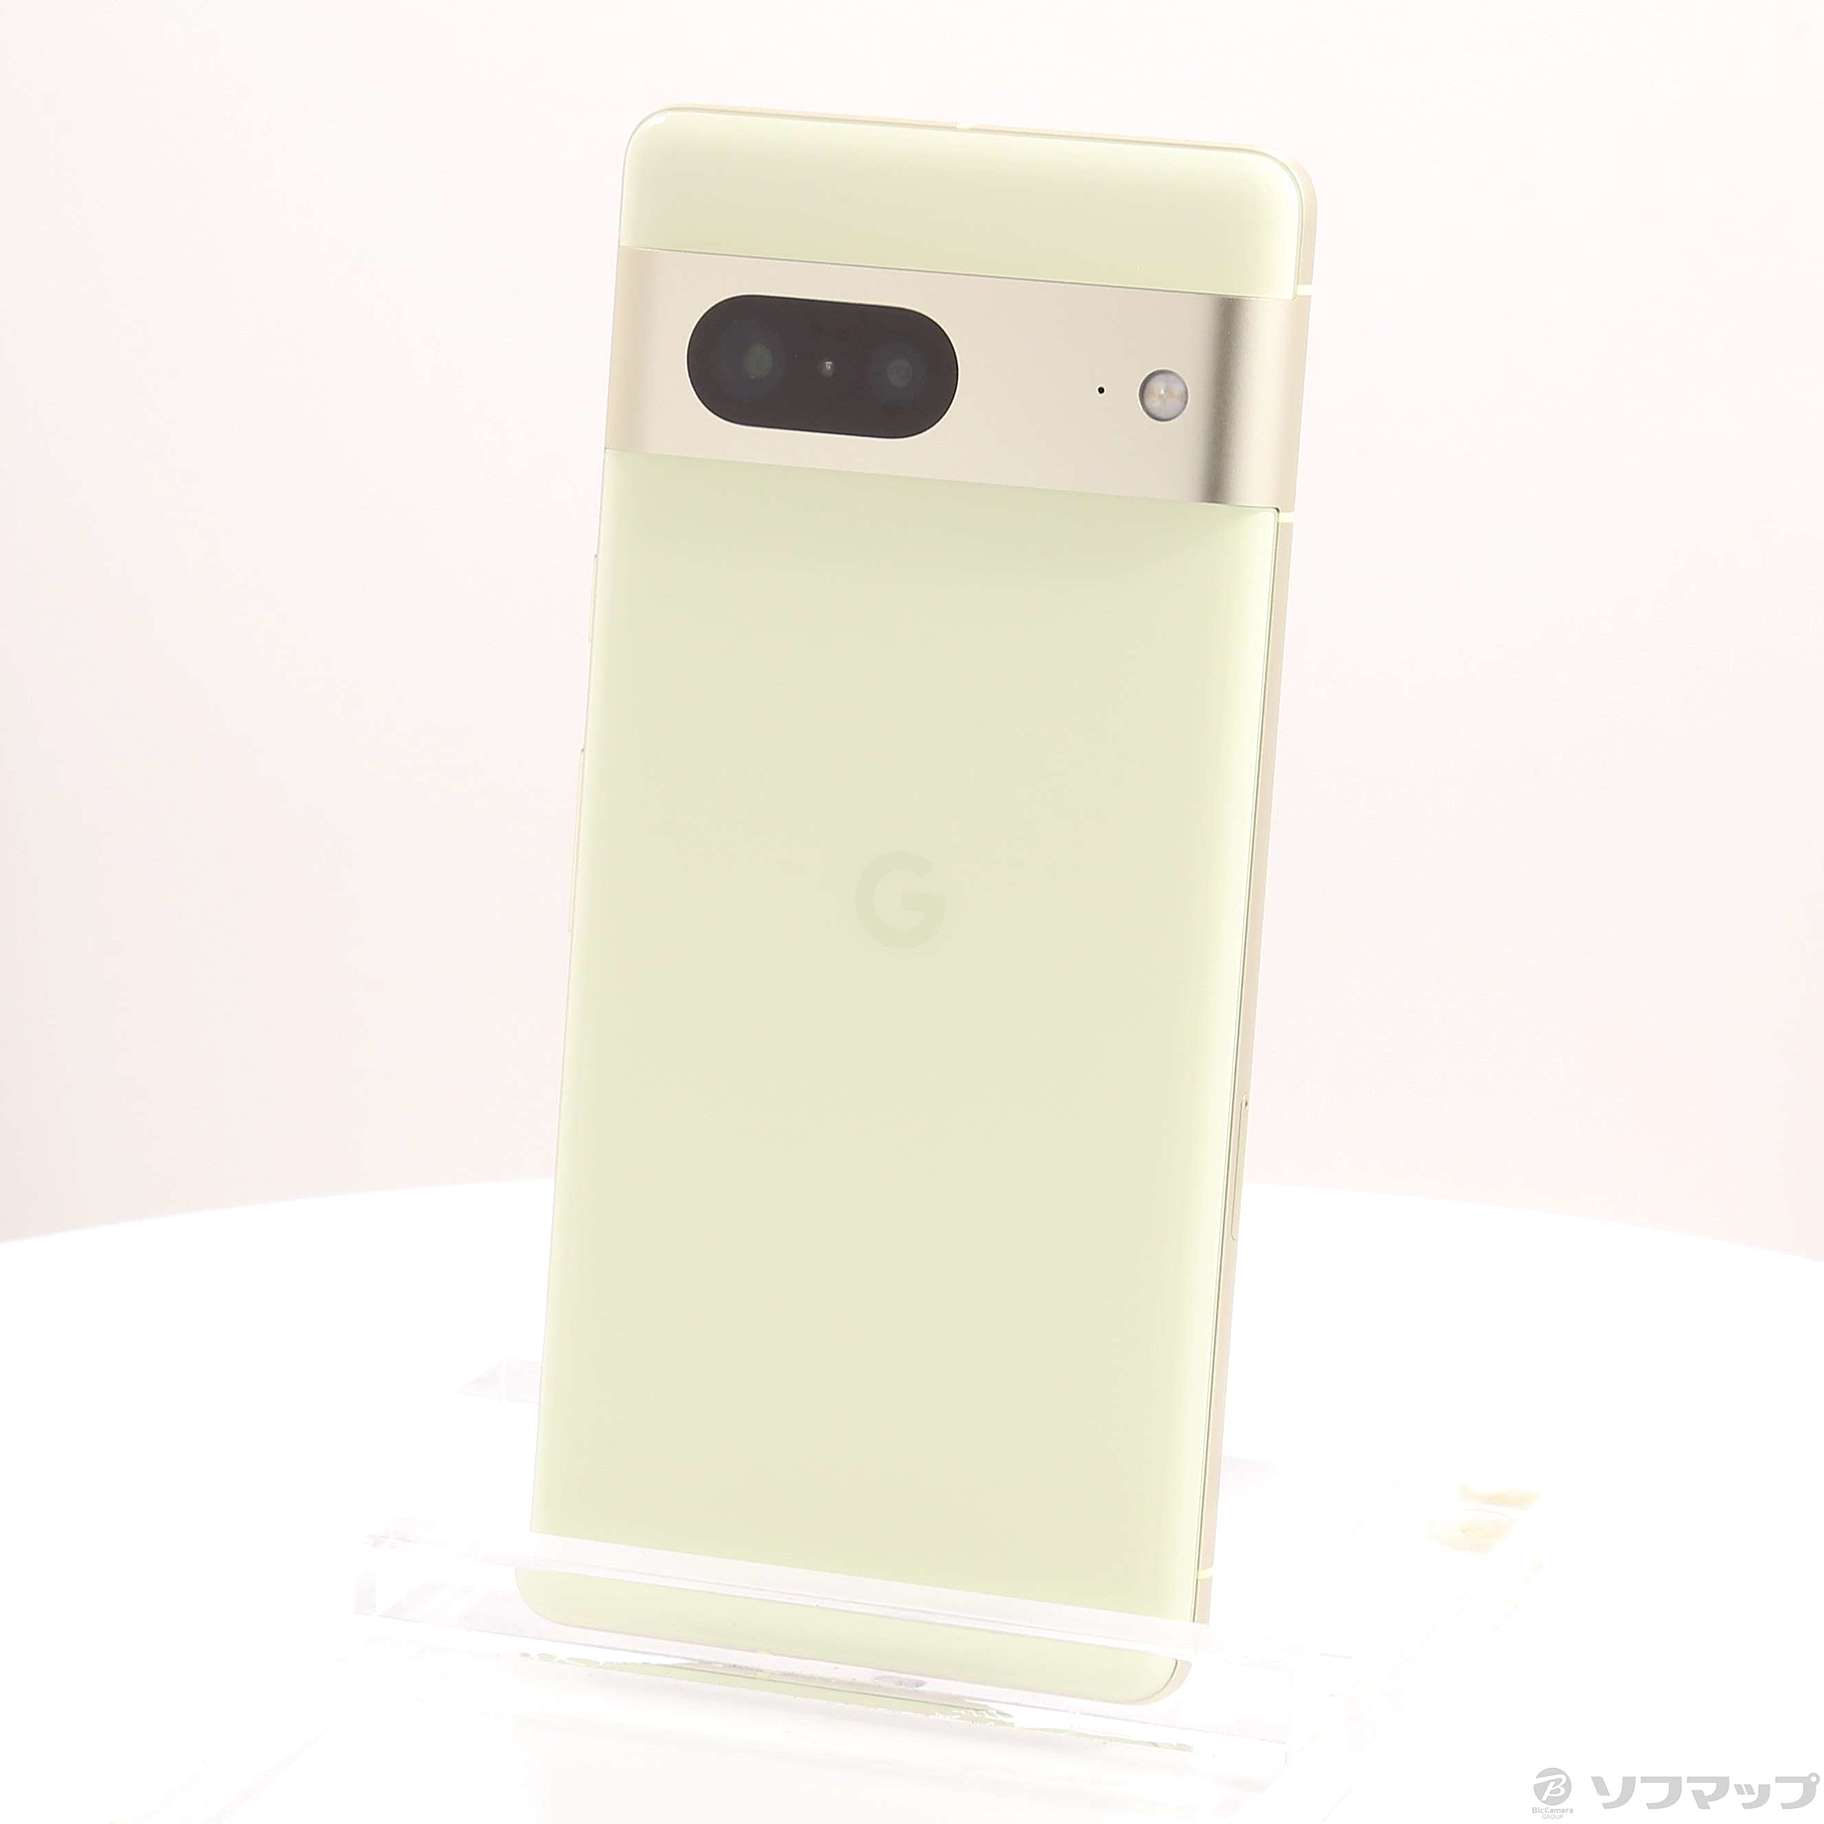 Google Pixel 7 Lemongrass 128GB SIM フリー